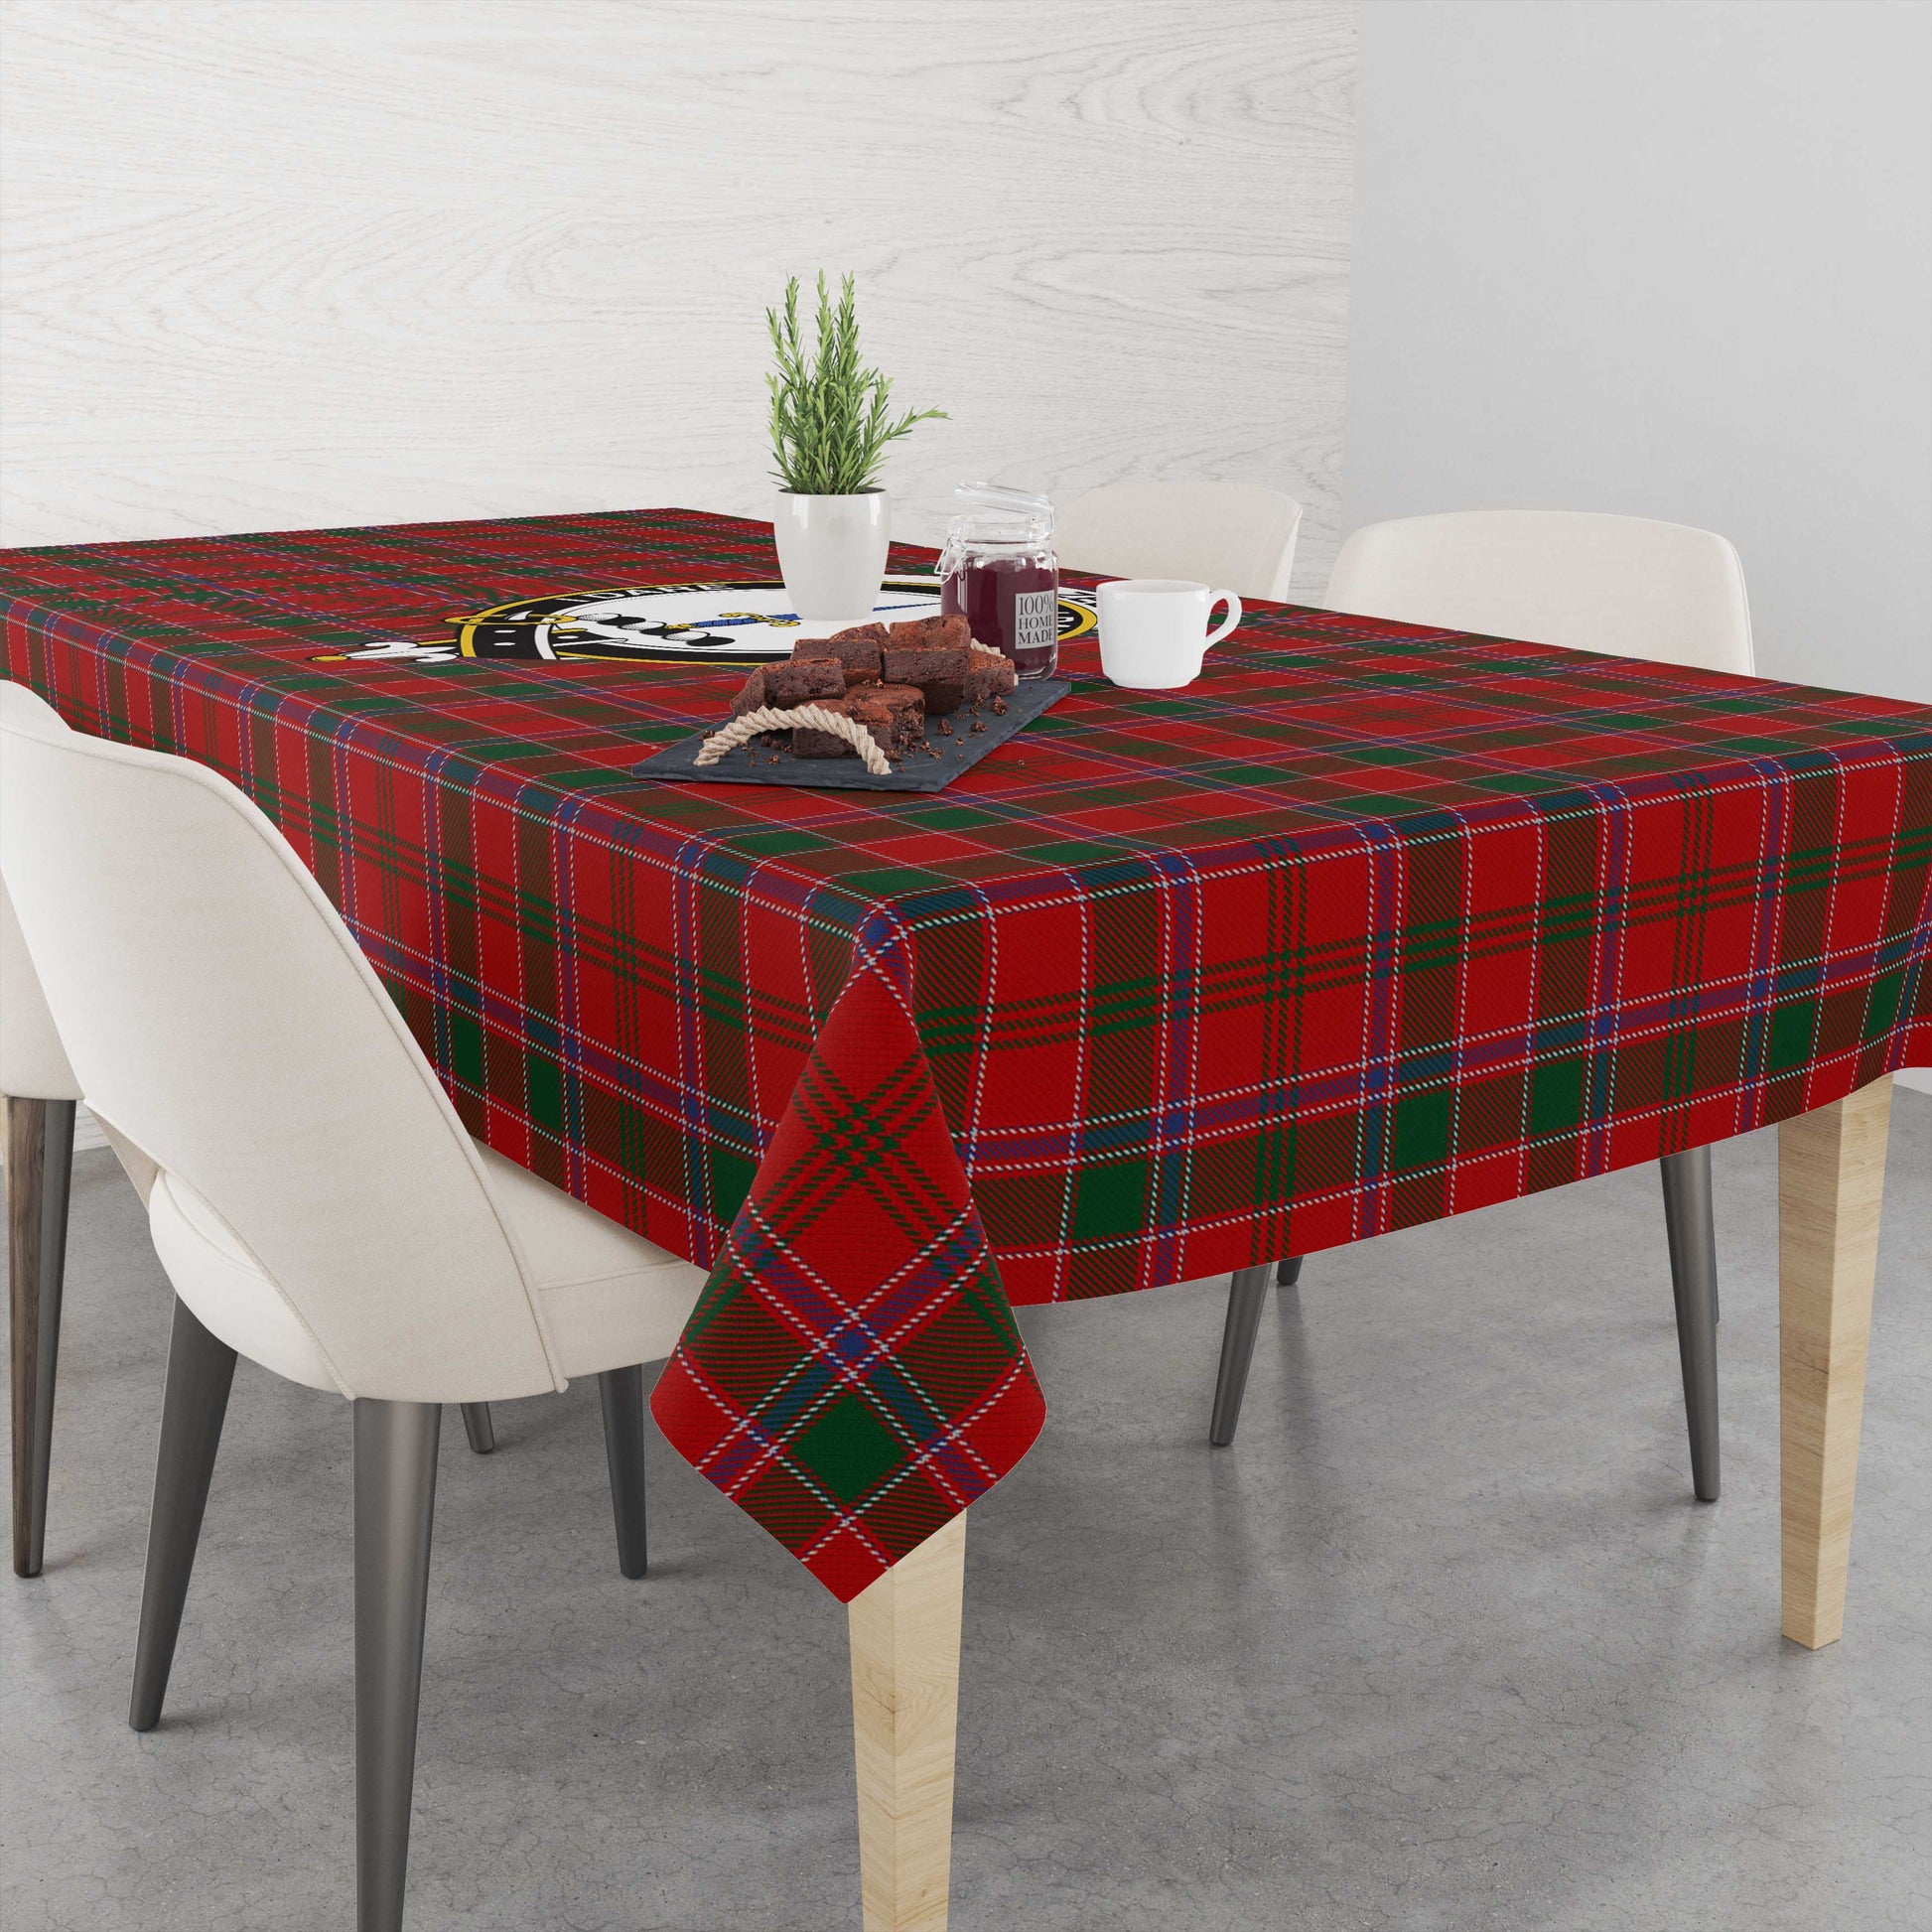 dalzell-dalziel-tatan-tablecloth-with-family-crest